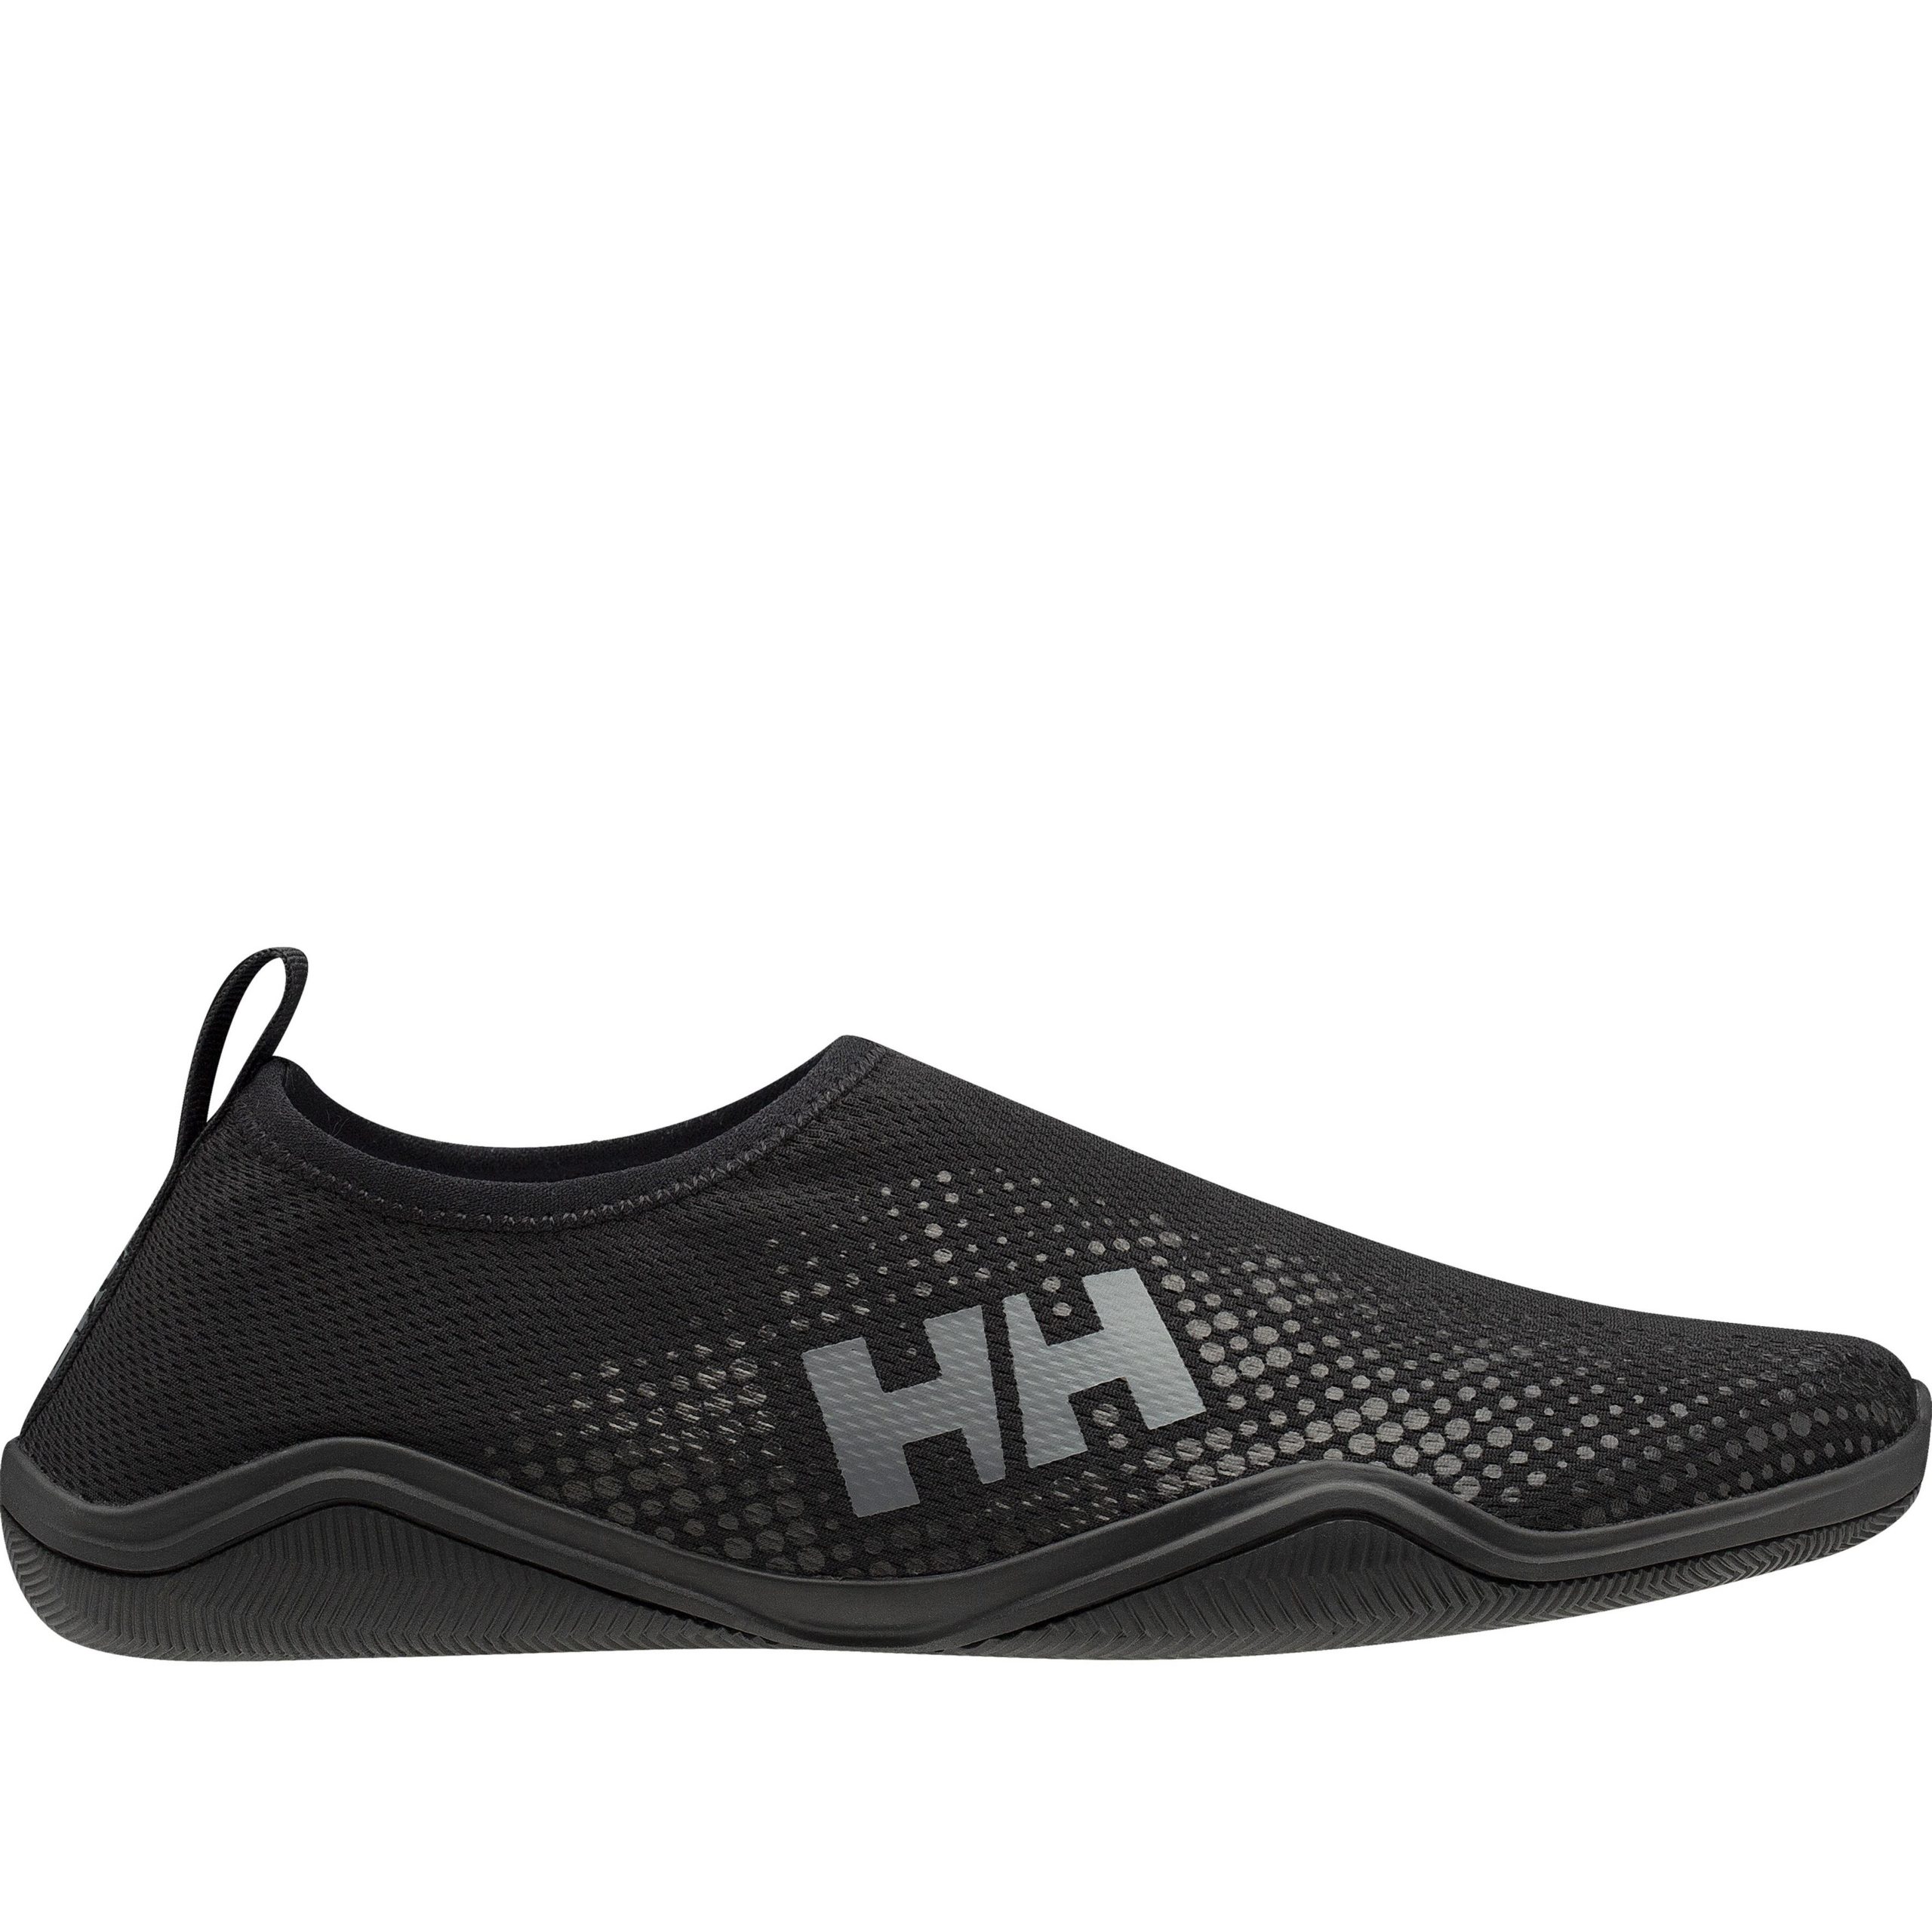 Helly Hansen Crest Watermoc Chaussures de Sports Aquatiques Homme 